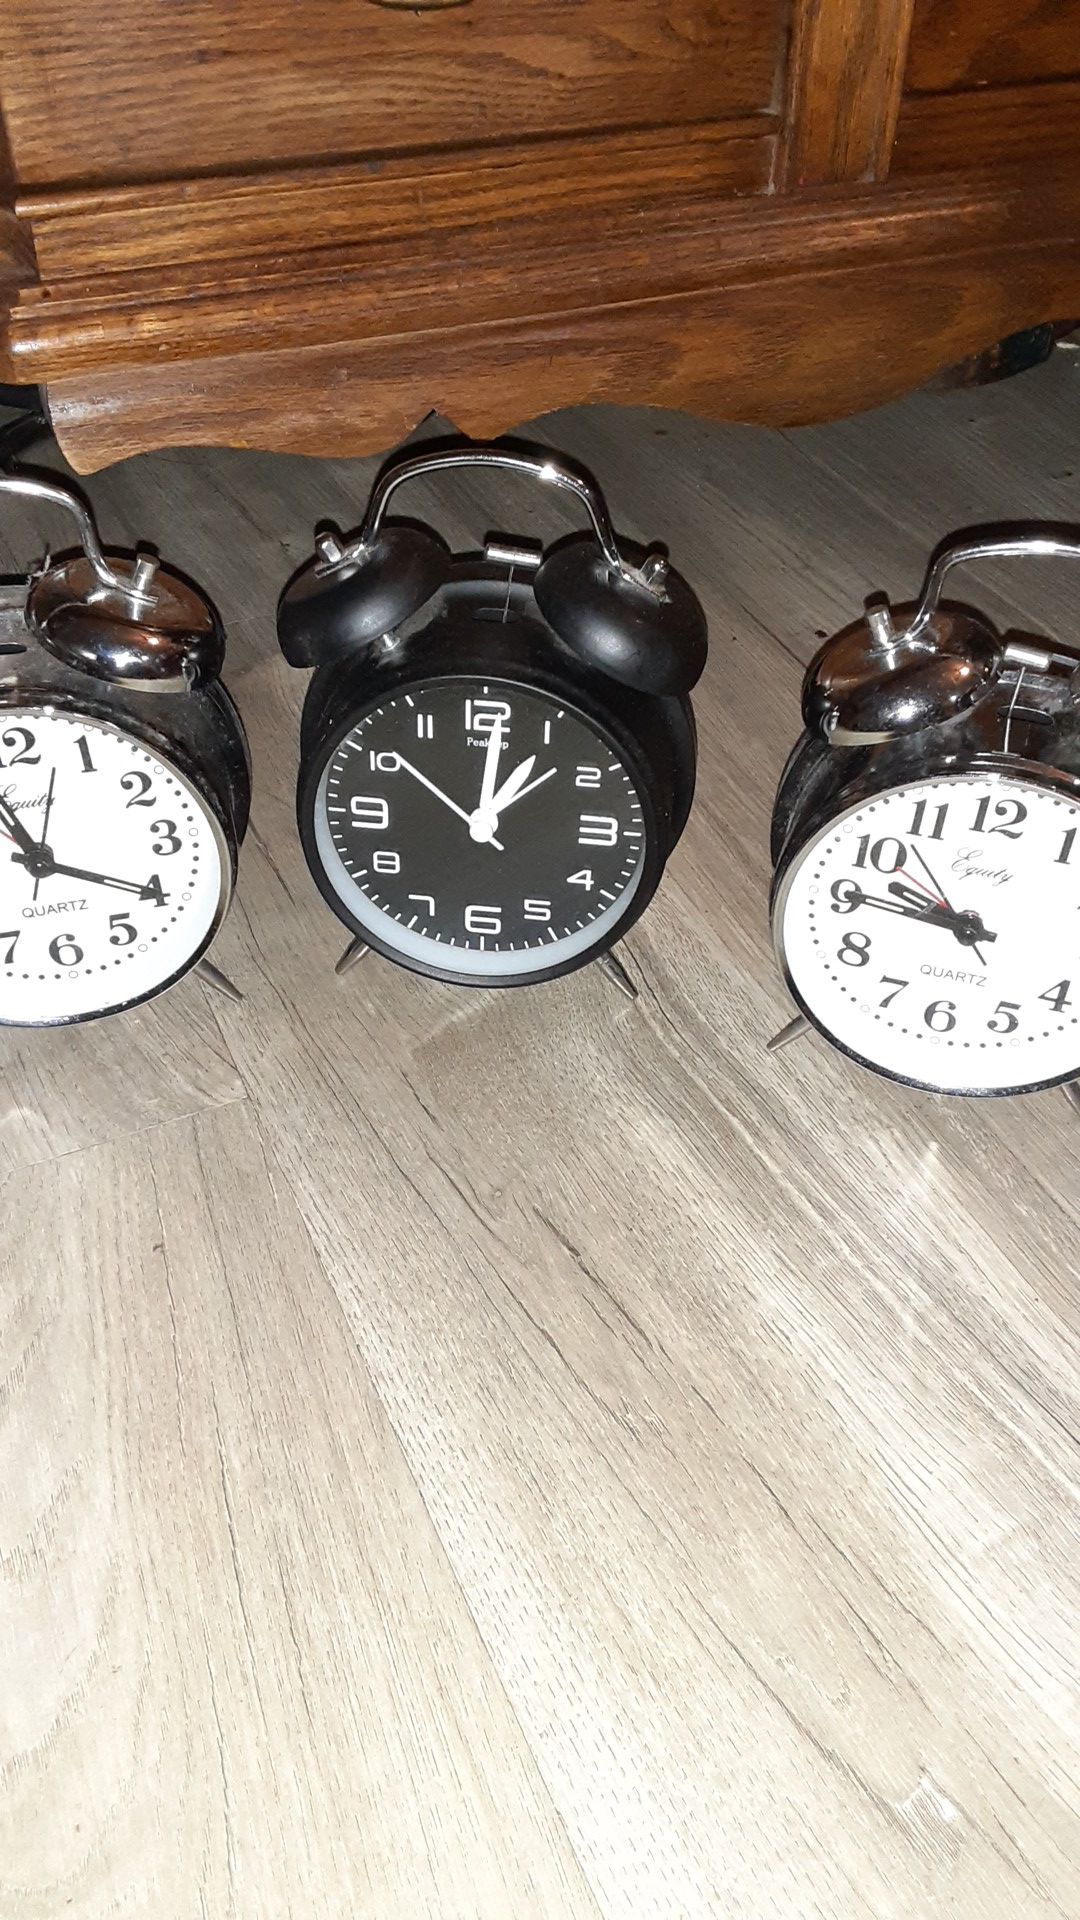 3 alarm clocks